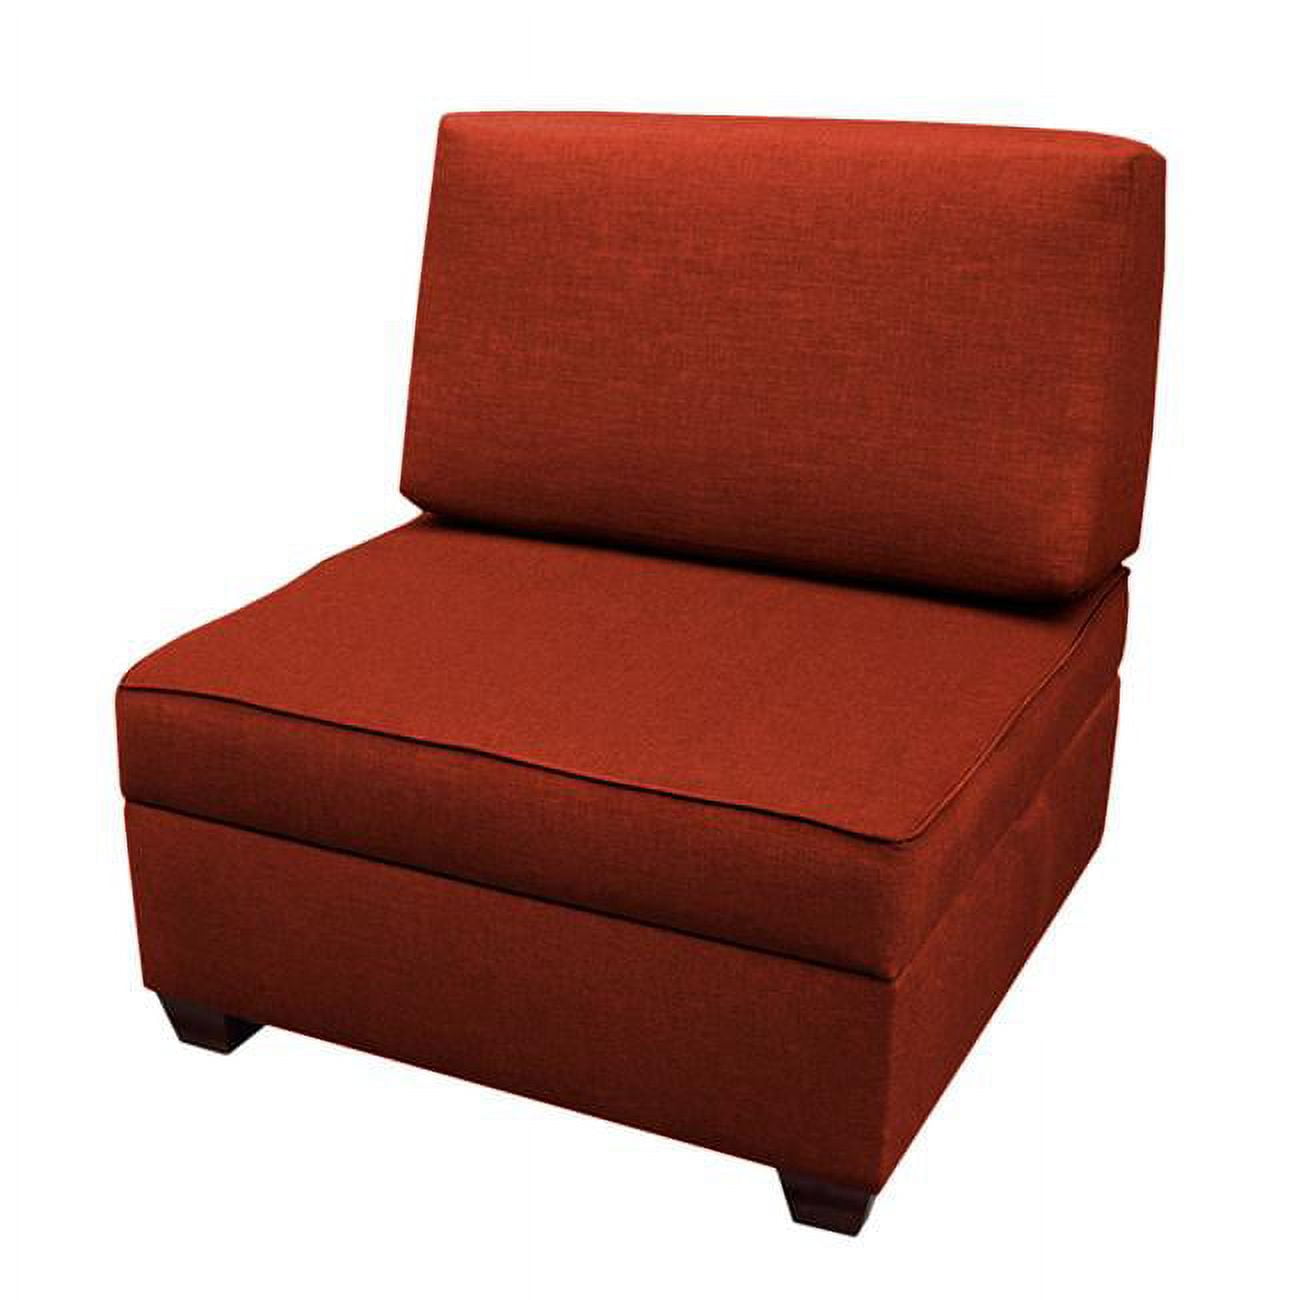 Mfch-tc 36 In. Chair Plus 1 Bs Storage Ottomans - Brick